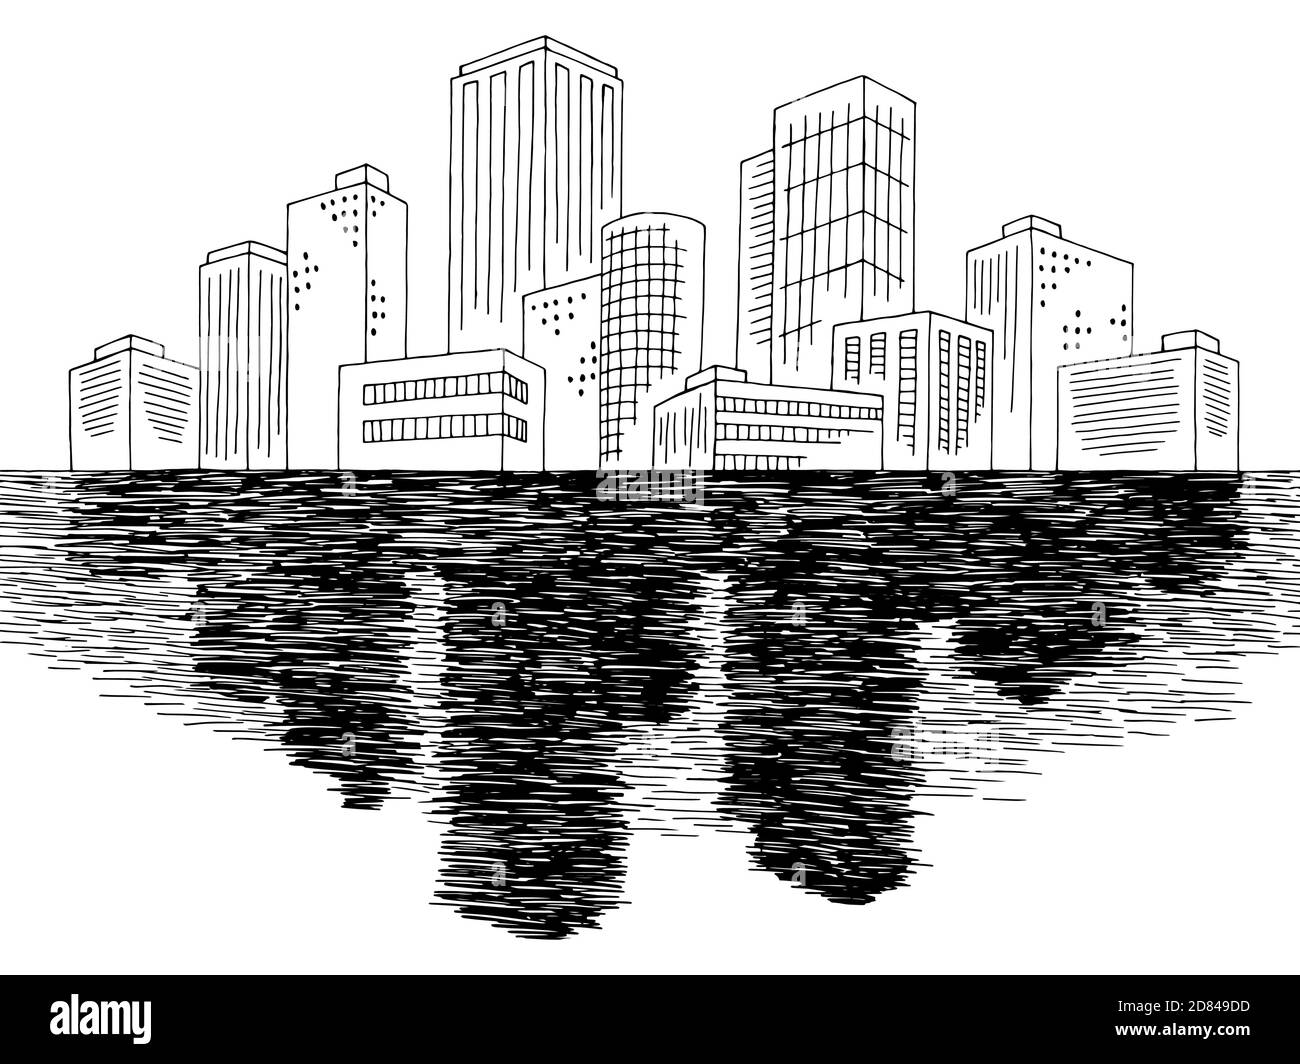 Stadt Meer Grafik schwarz weiß Stadtbild Skyline Skizze Illustration Vektor Stock Vektor